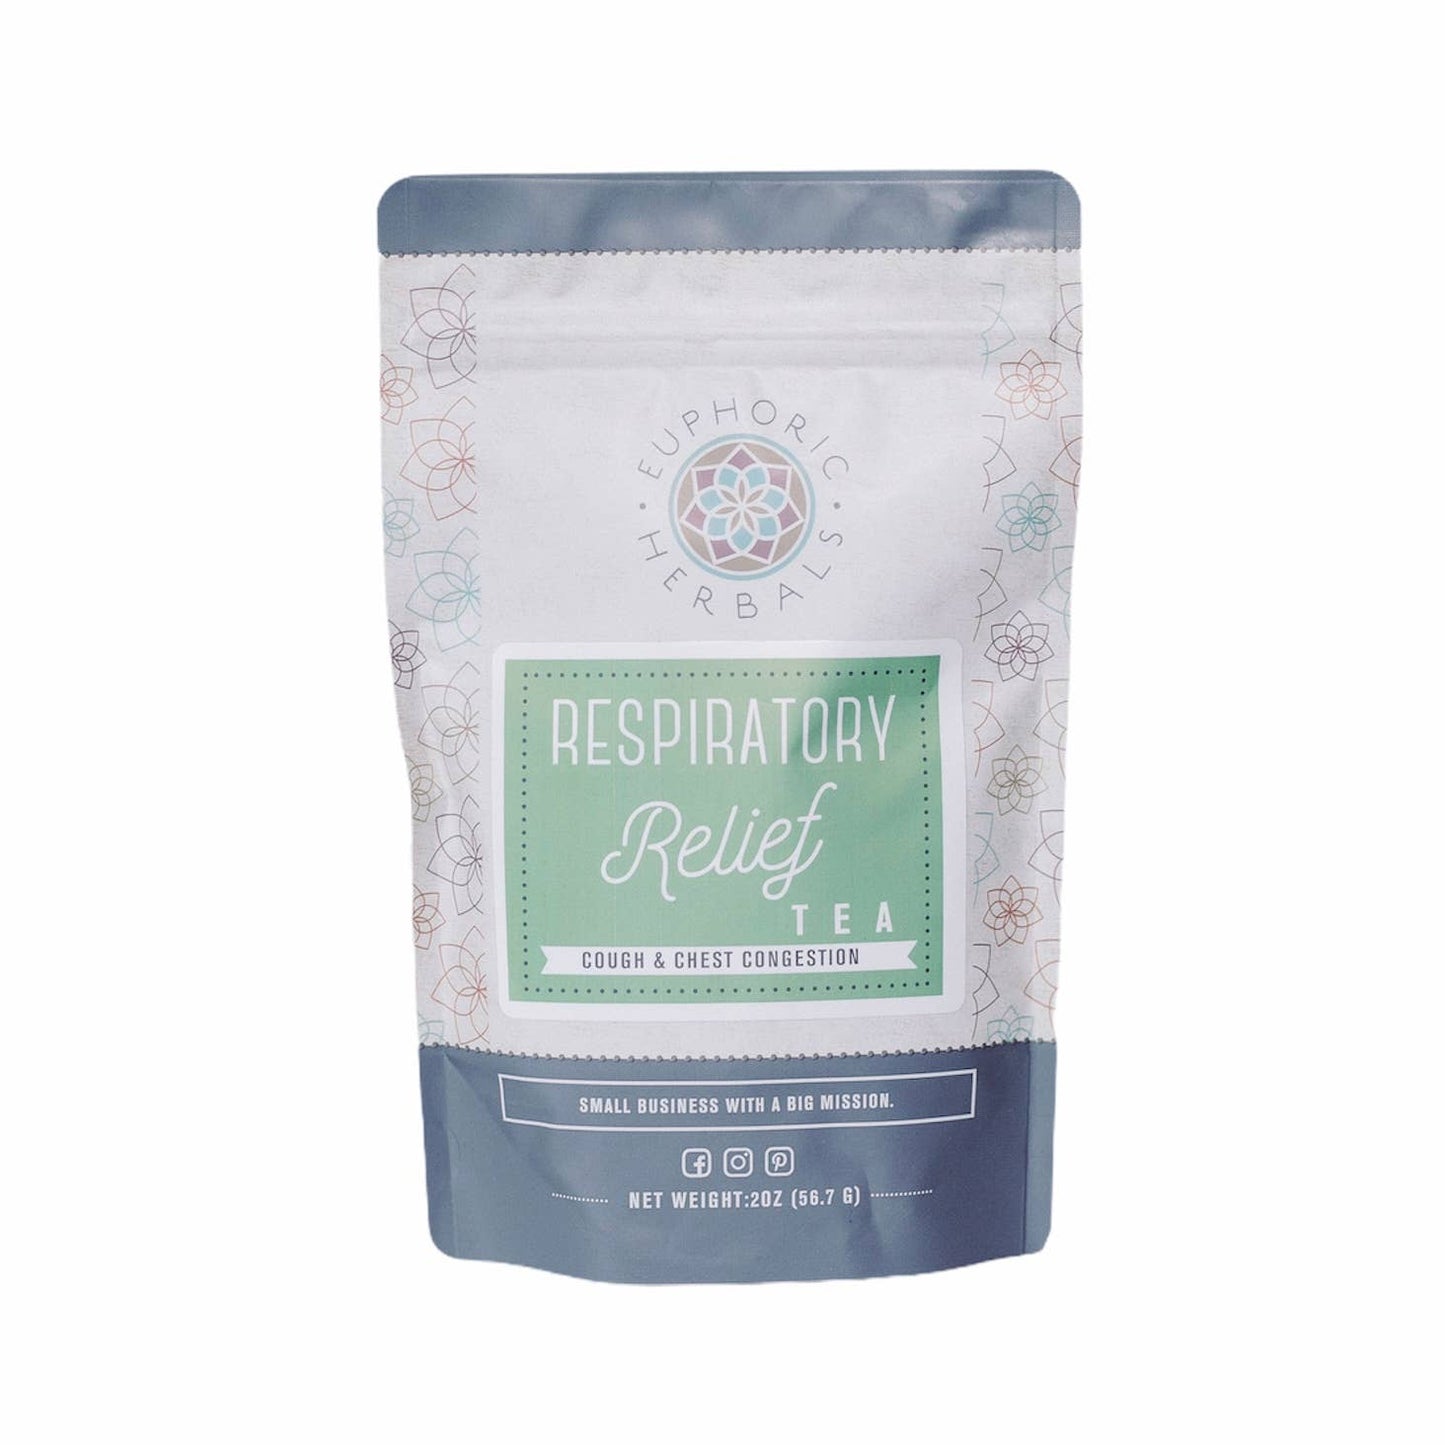 Respiratory Relief Tea: 2 oz